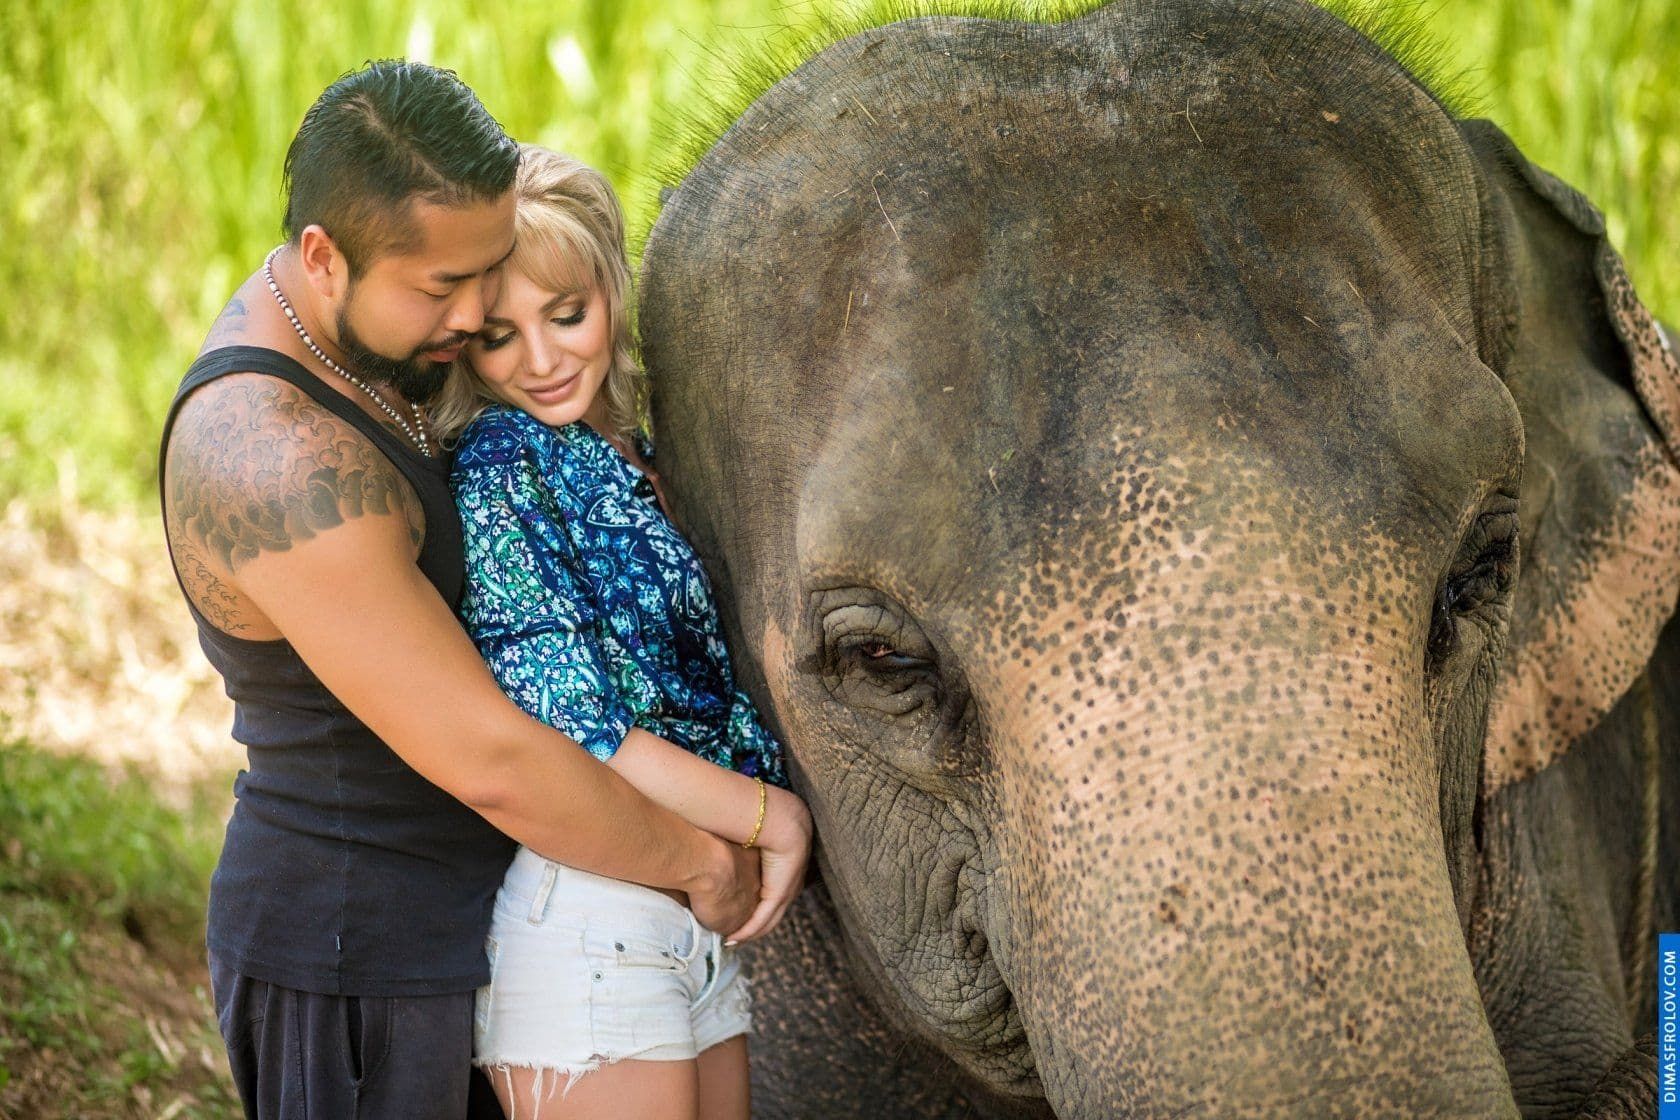 Photo shoot with an elephant on Koh Samui. photographer Dimas Frolov. photo1743